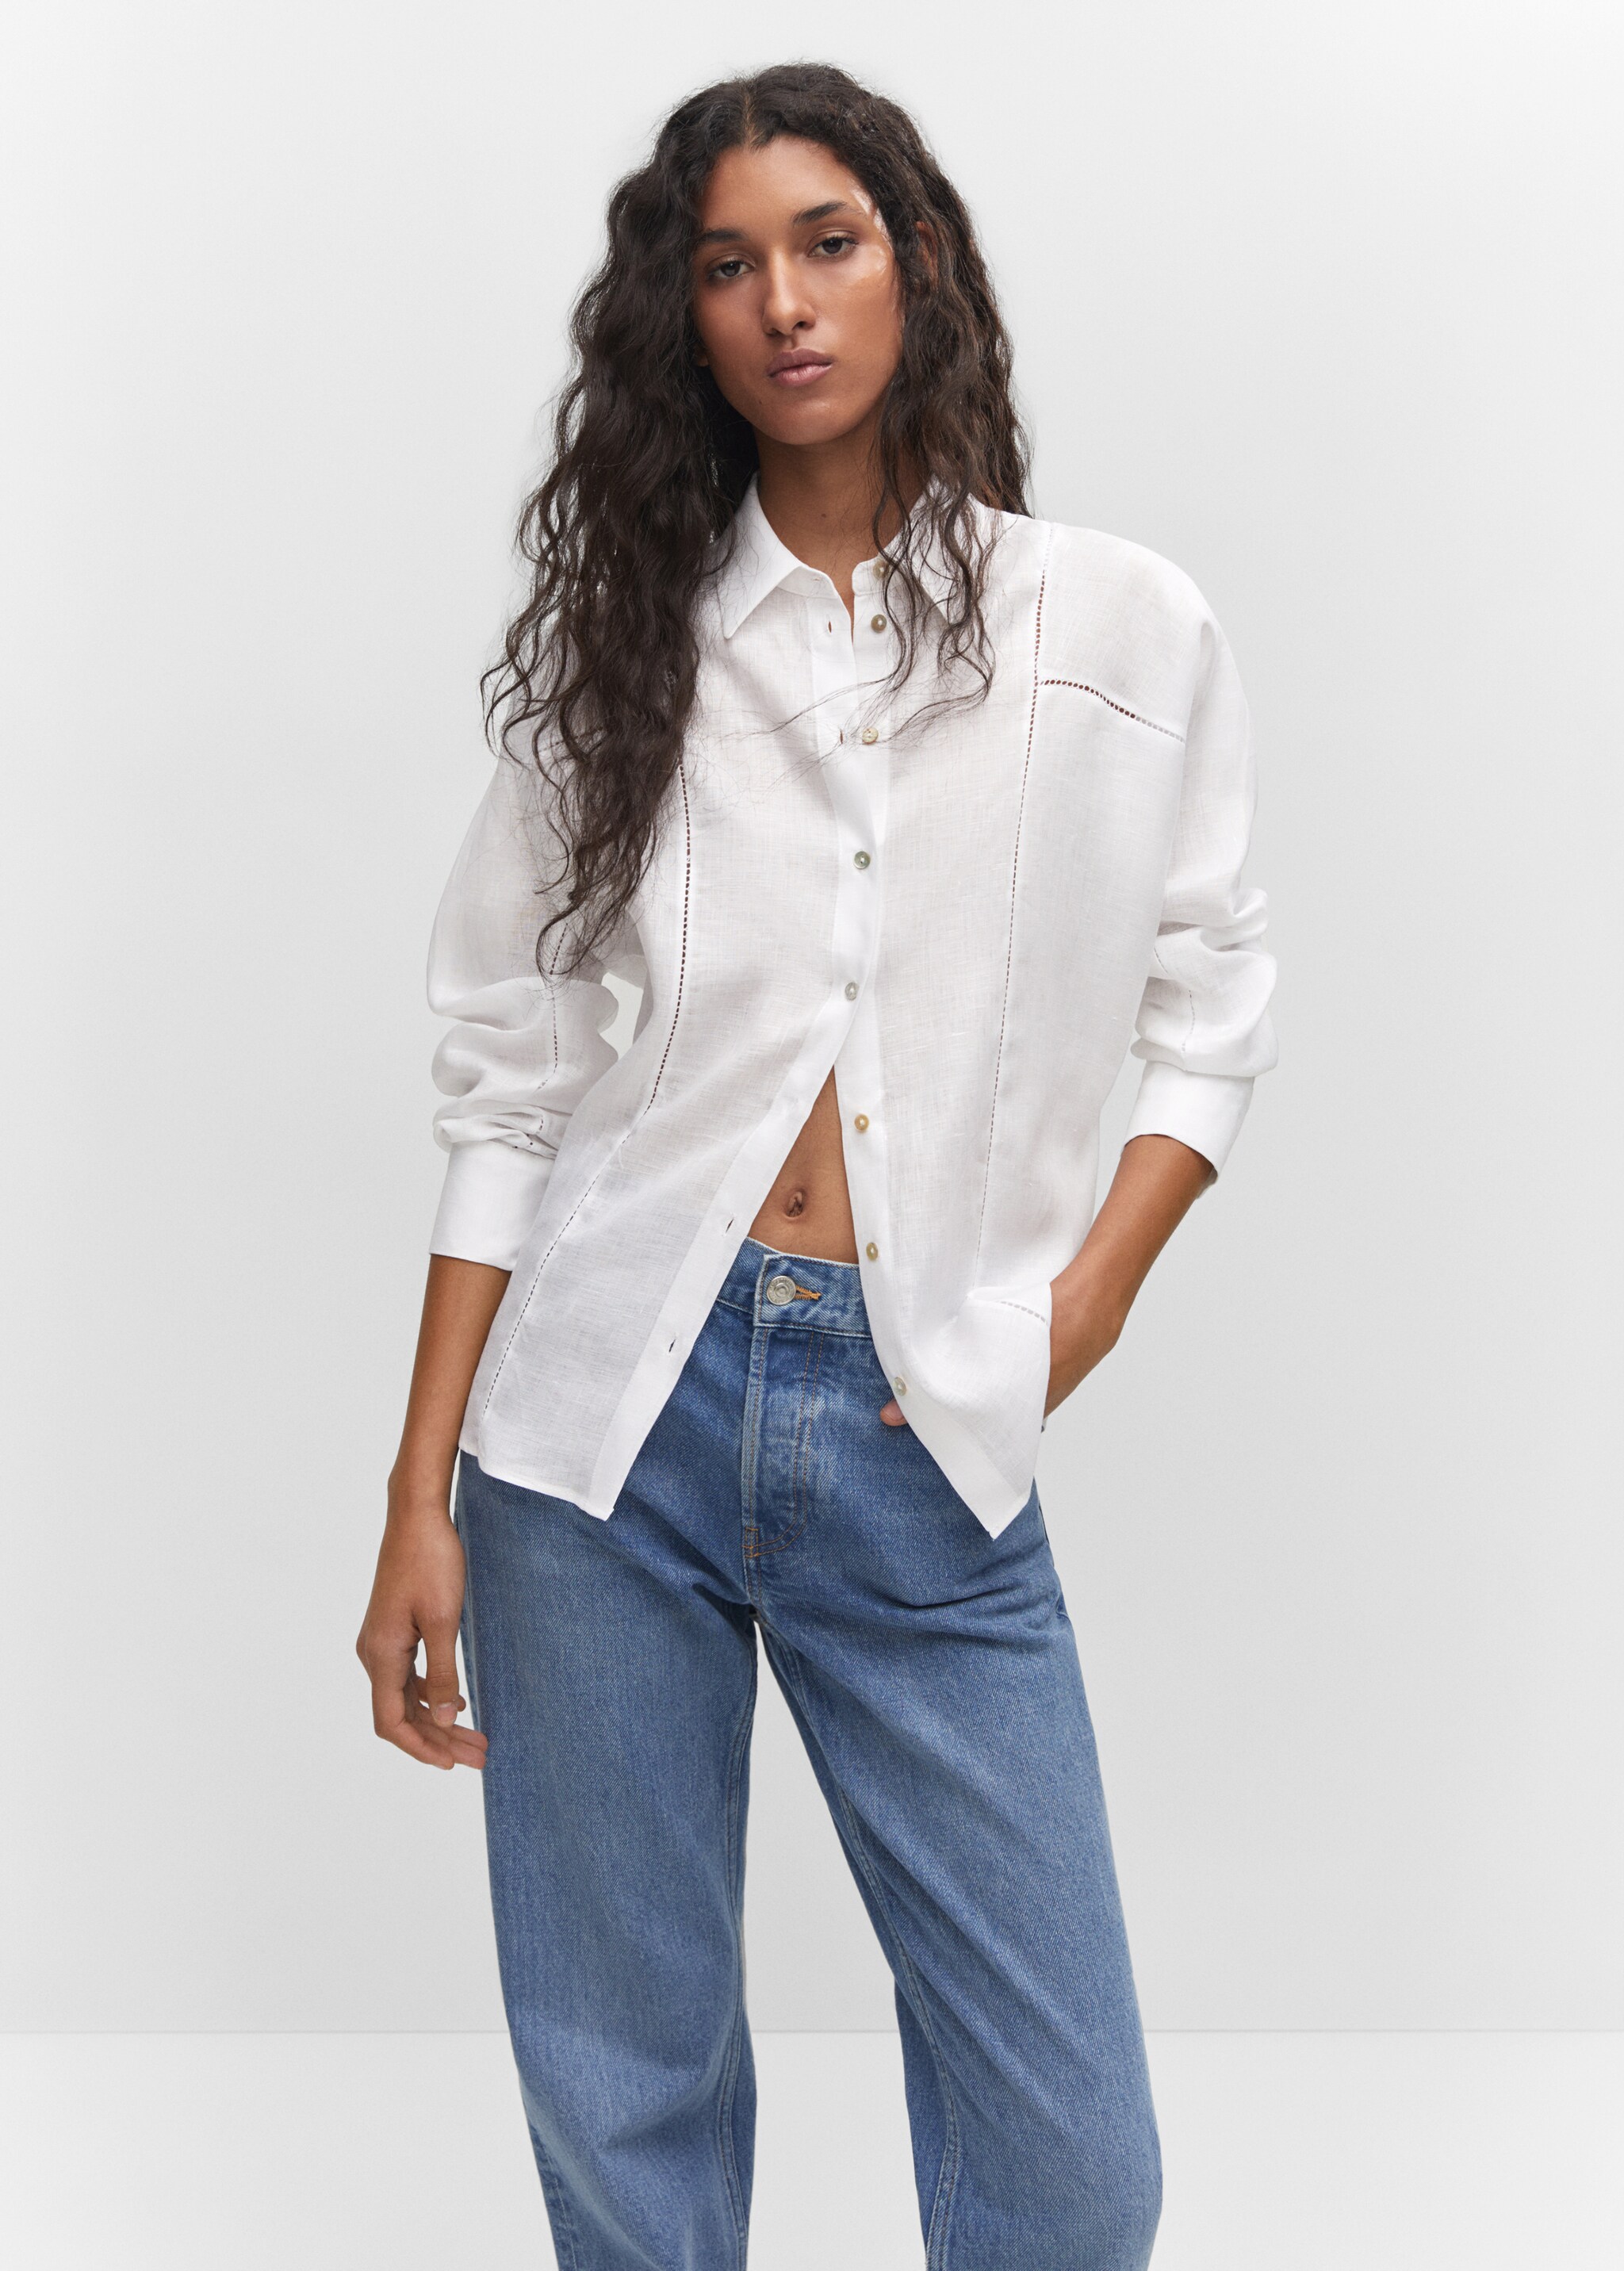 100% linen blouse - Medium plane